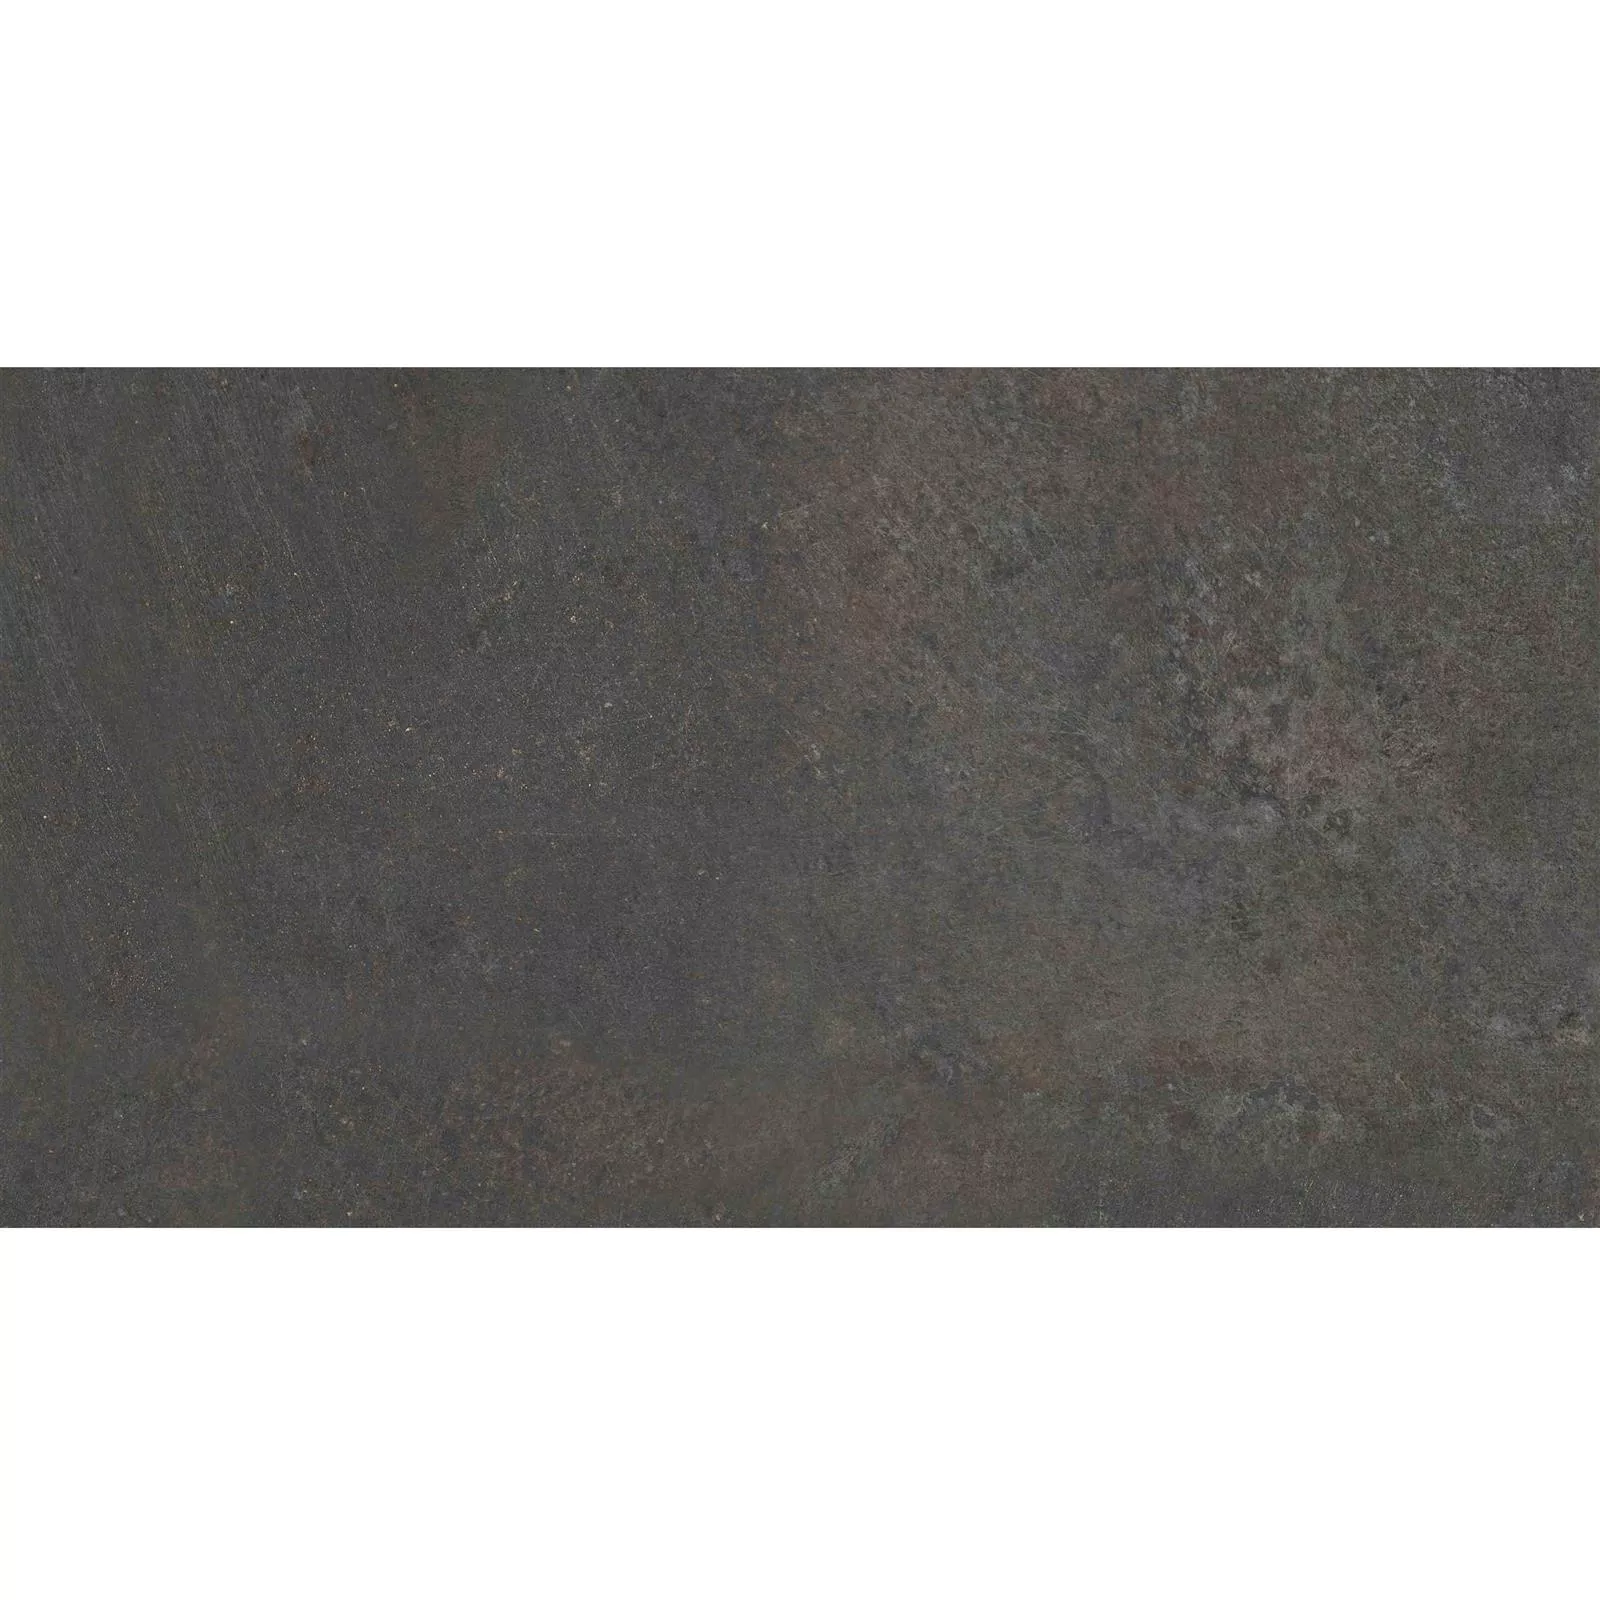 Muster Bodenfliesen Peaceway Anthrazit 30x60cm